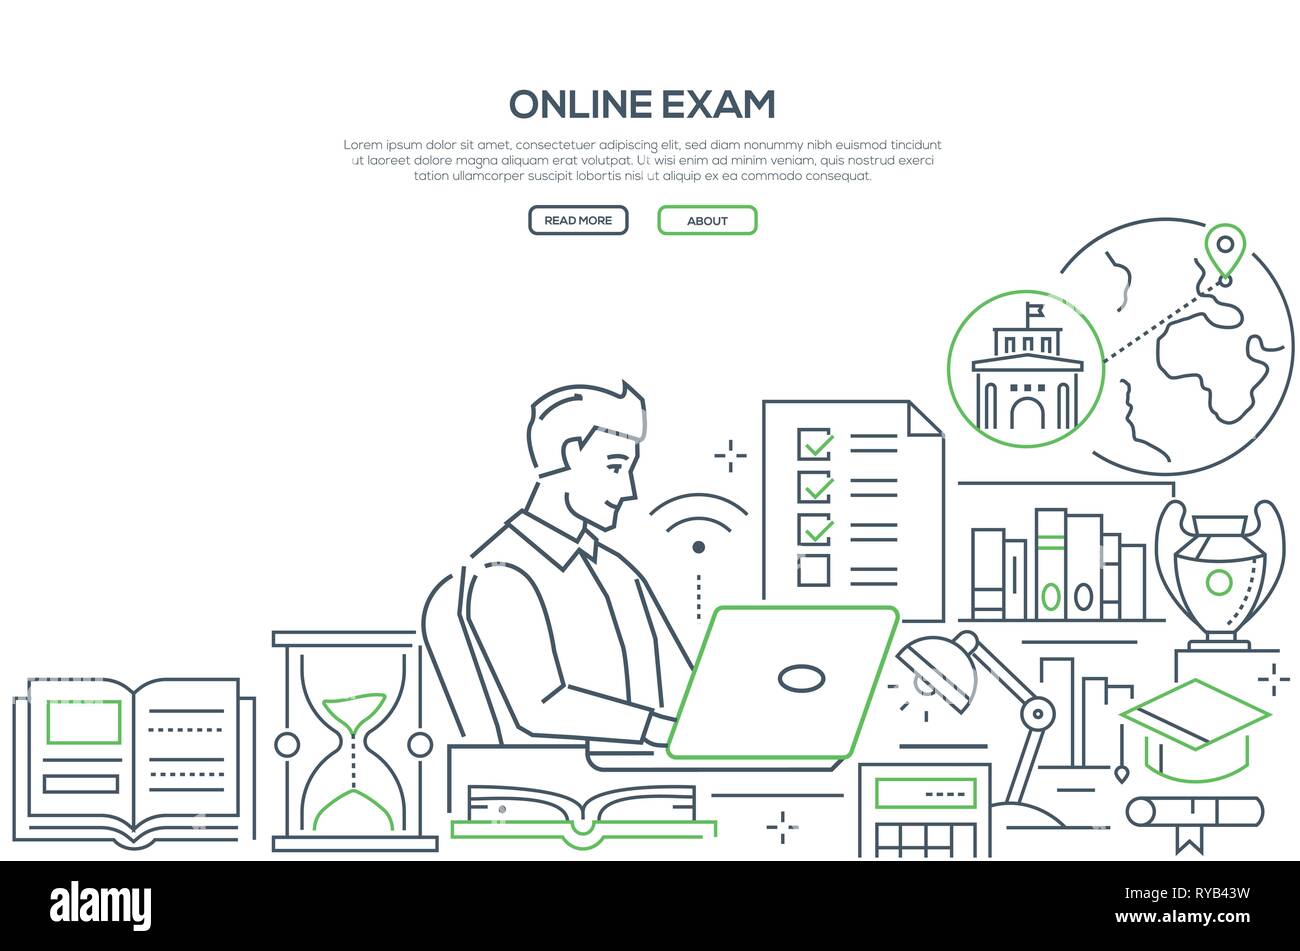 Online exam - line design style web banner Stock Vector